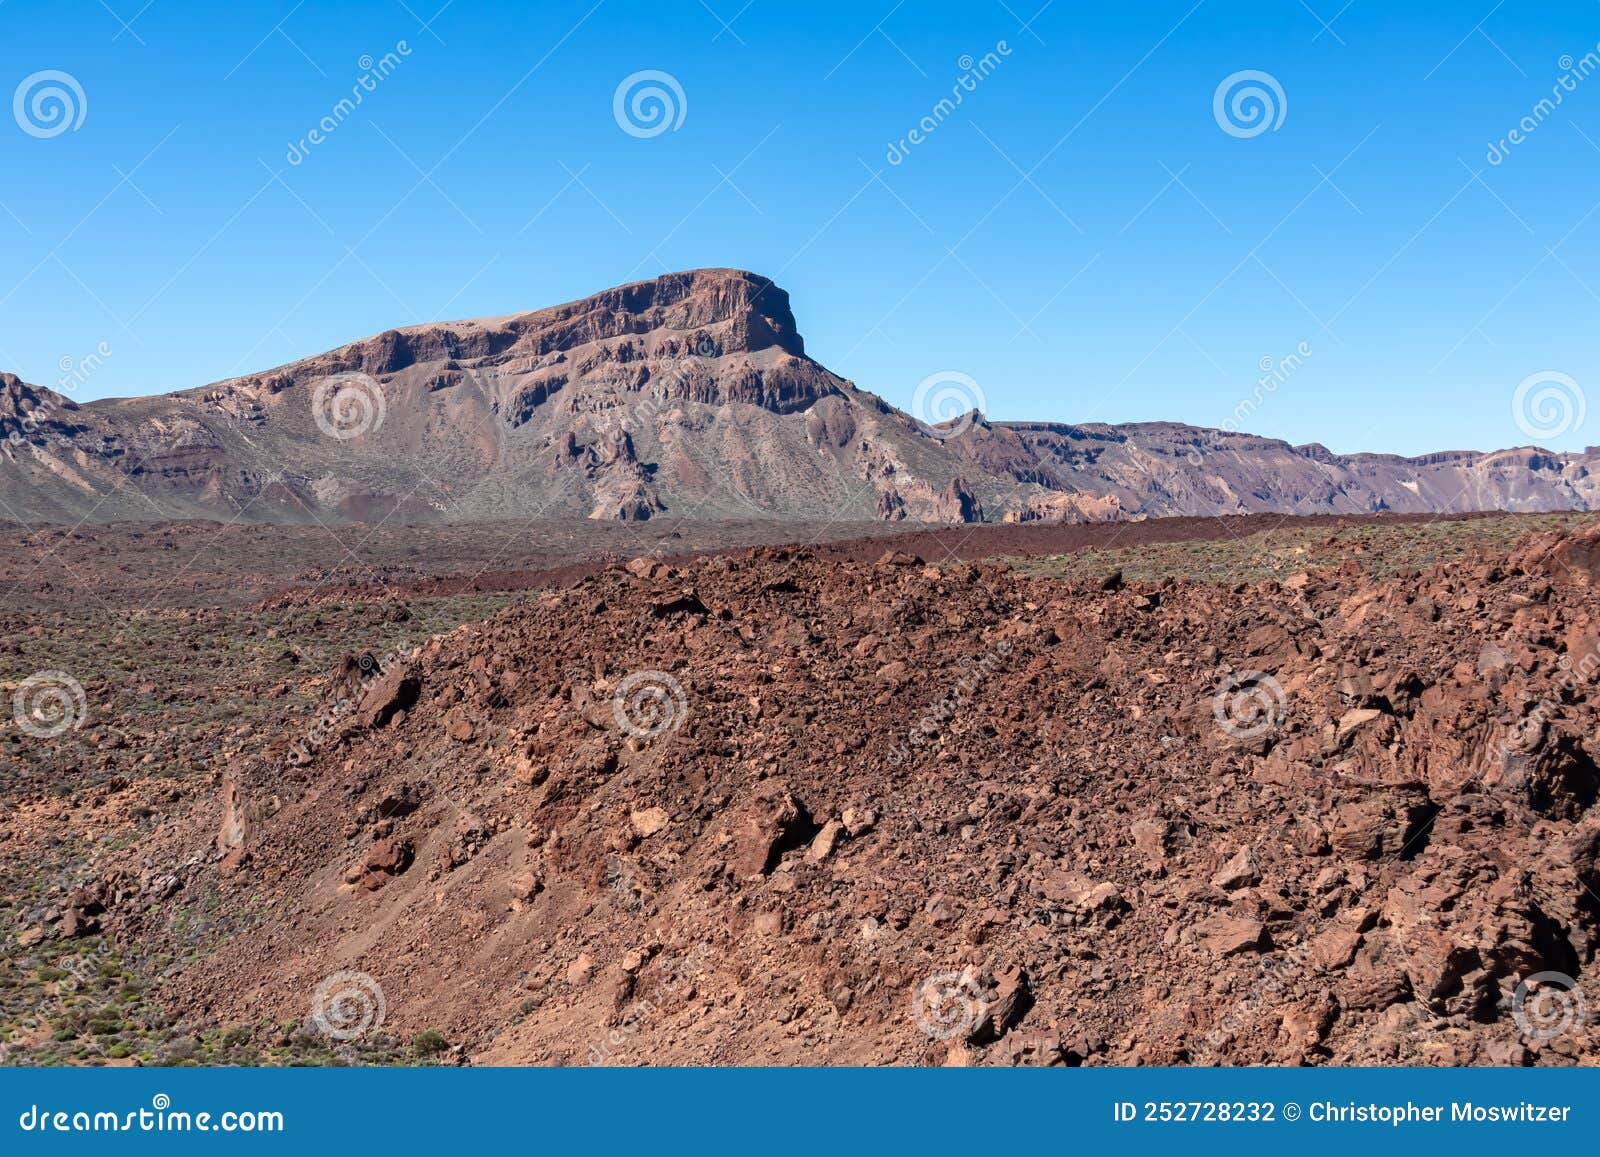 teide - panoramic view on mount guajara seen from minas de san jose in mount teide national park, tenerife, spain